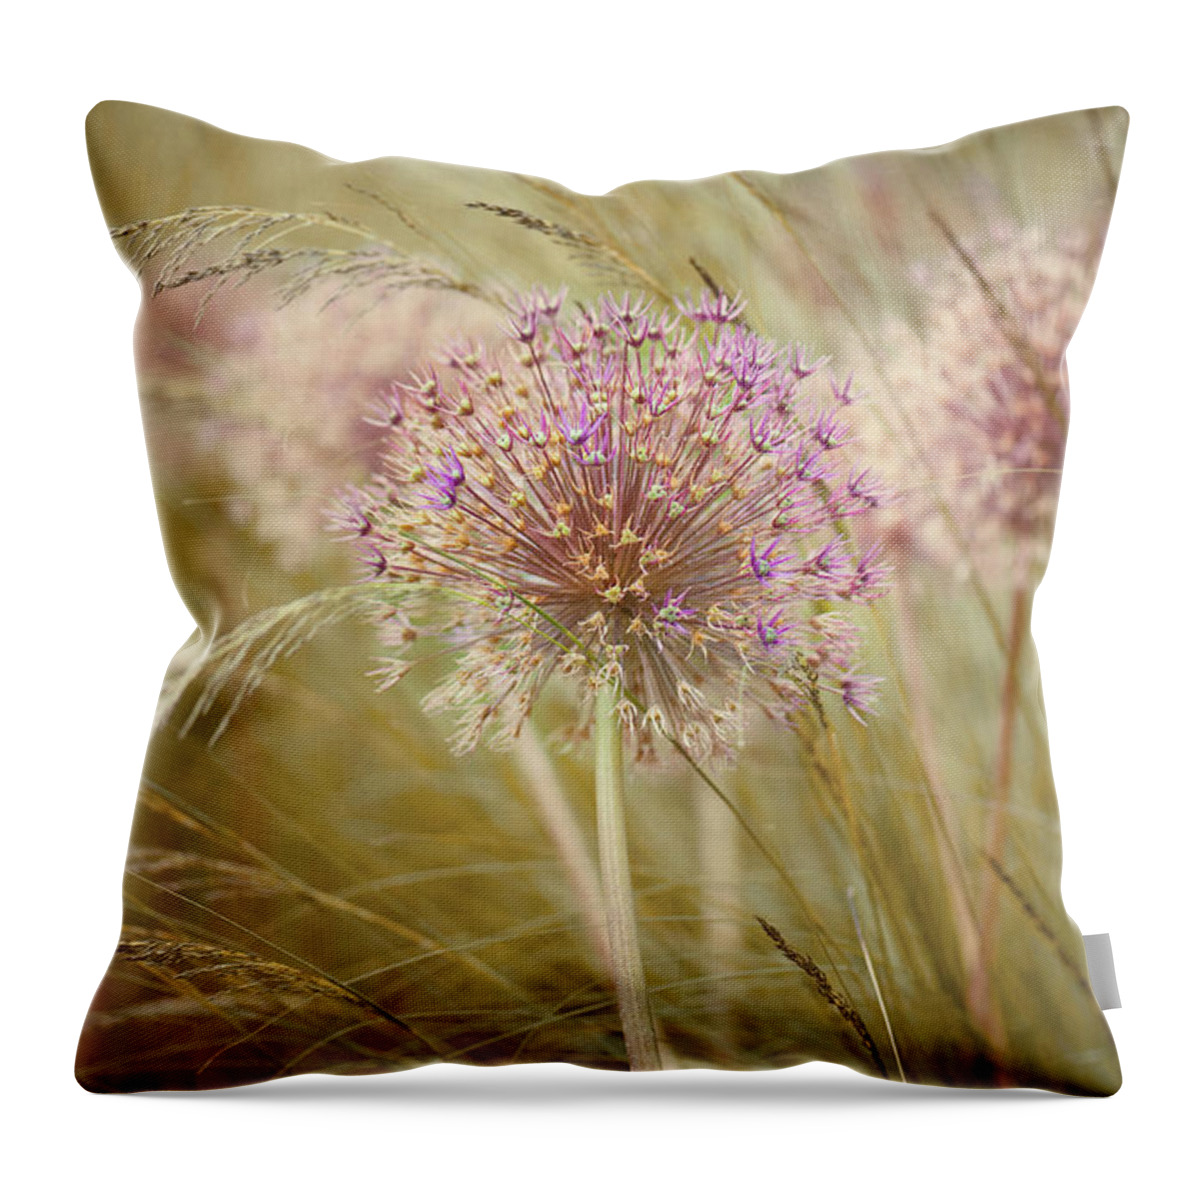 Grass Throw Pillow featuring the photograph Allium Purple Sensation by Jacky Parker Photography